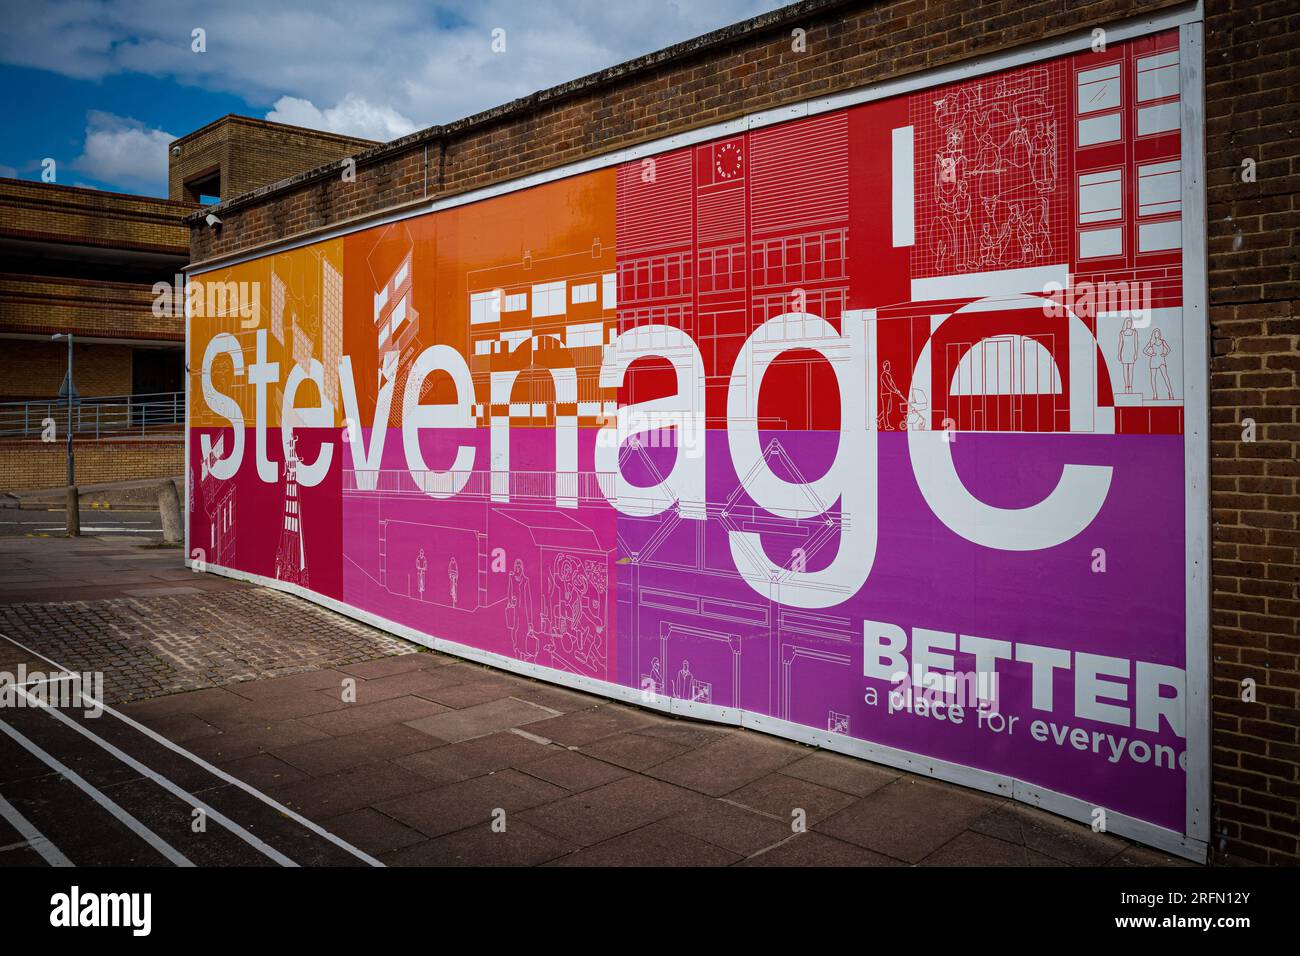 Stevenage Better A Place for Everyone poster in Stevenage. £1bn regeneration programme led by Stevenage Borough Council & Development Board. Stock Photo